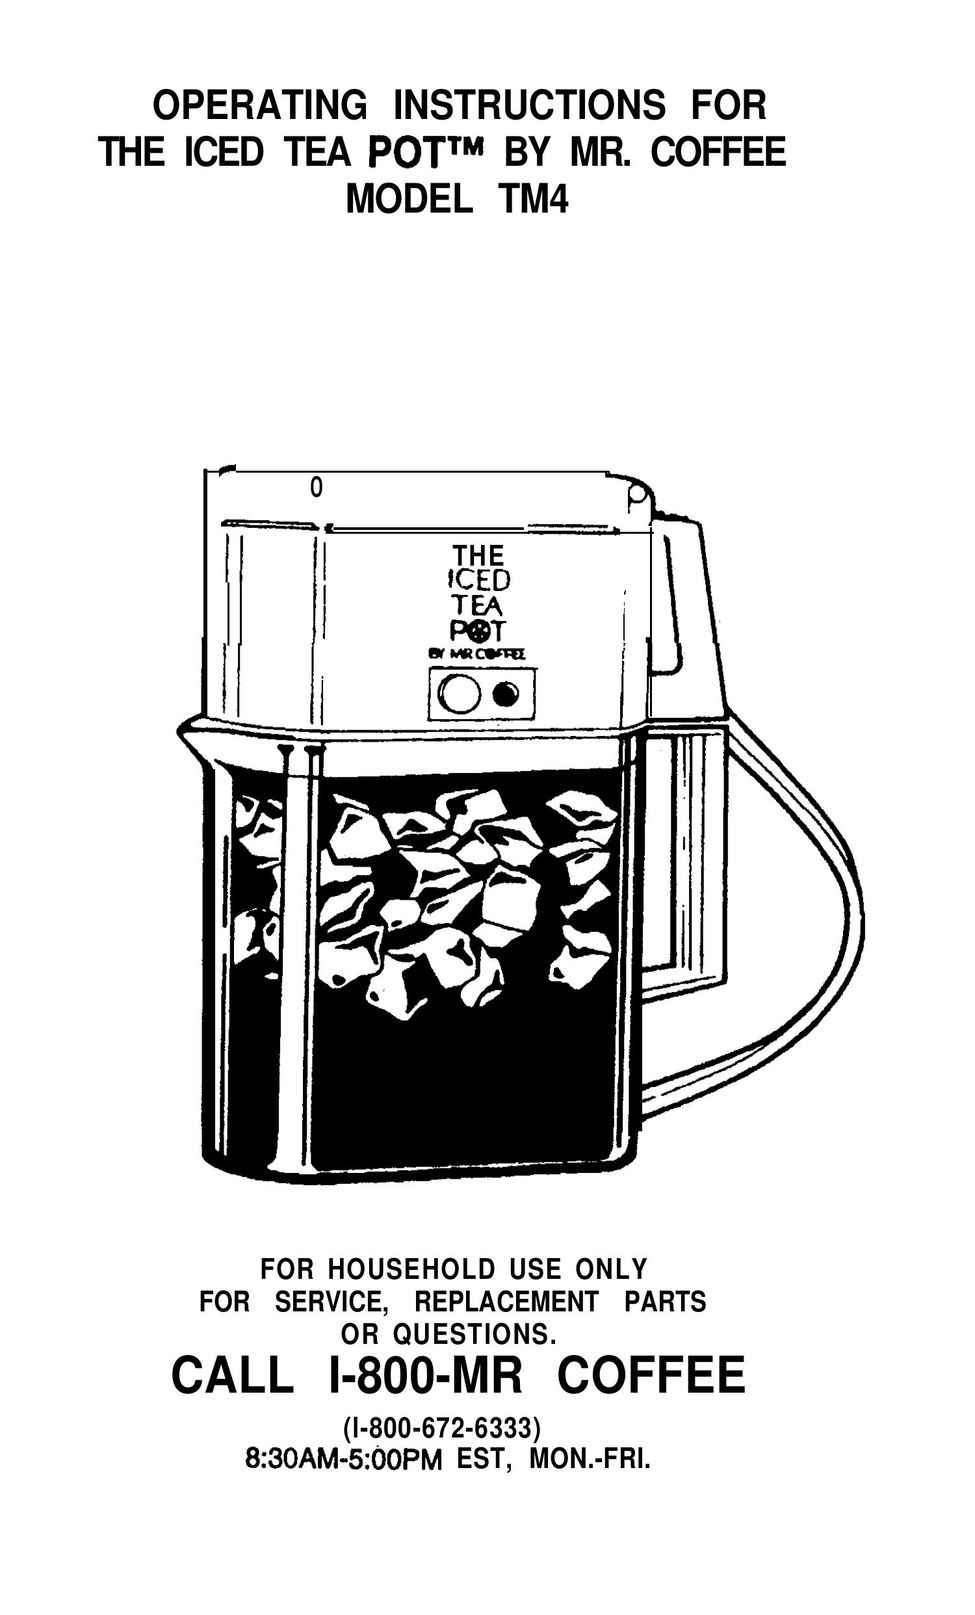 Mr. Coffee TM4 Ice Tea Maker User Manual